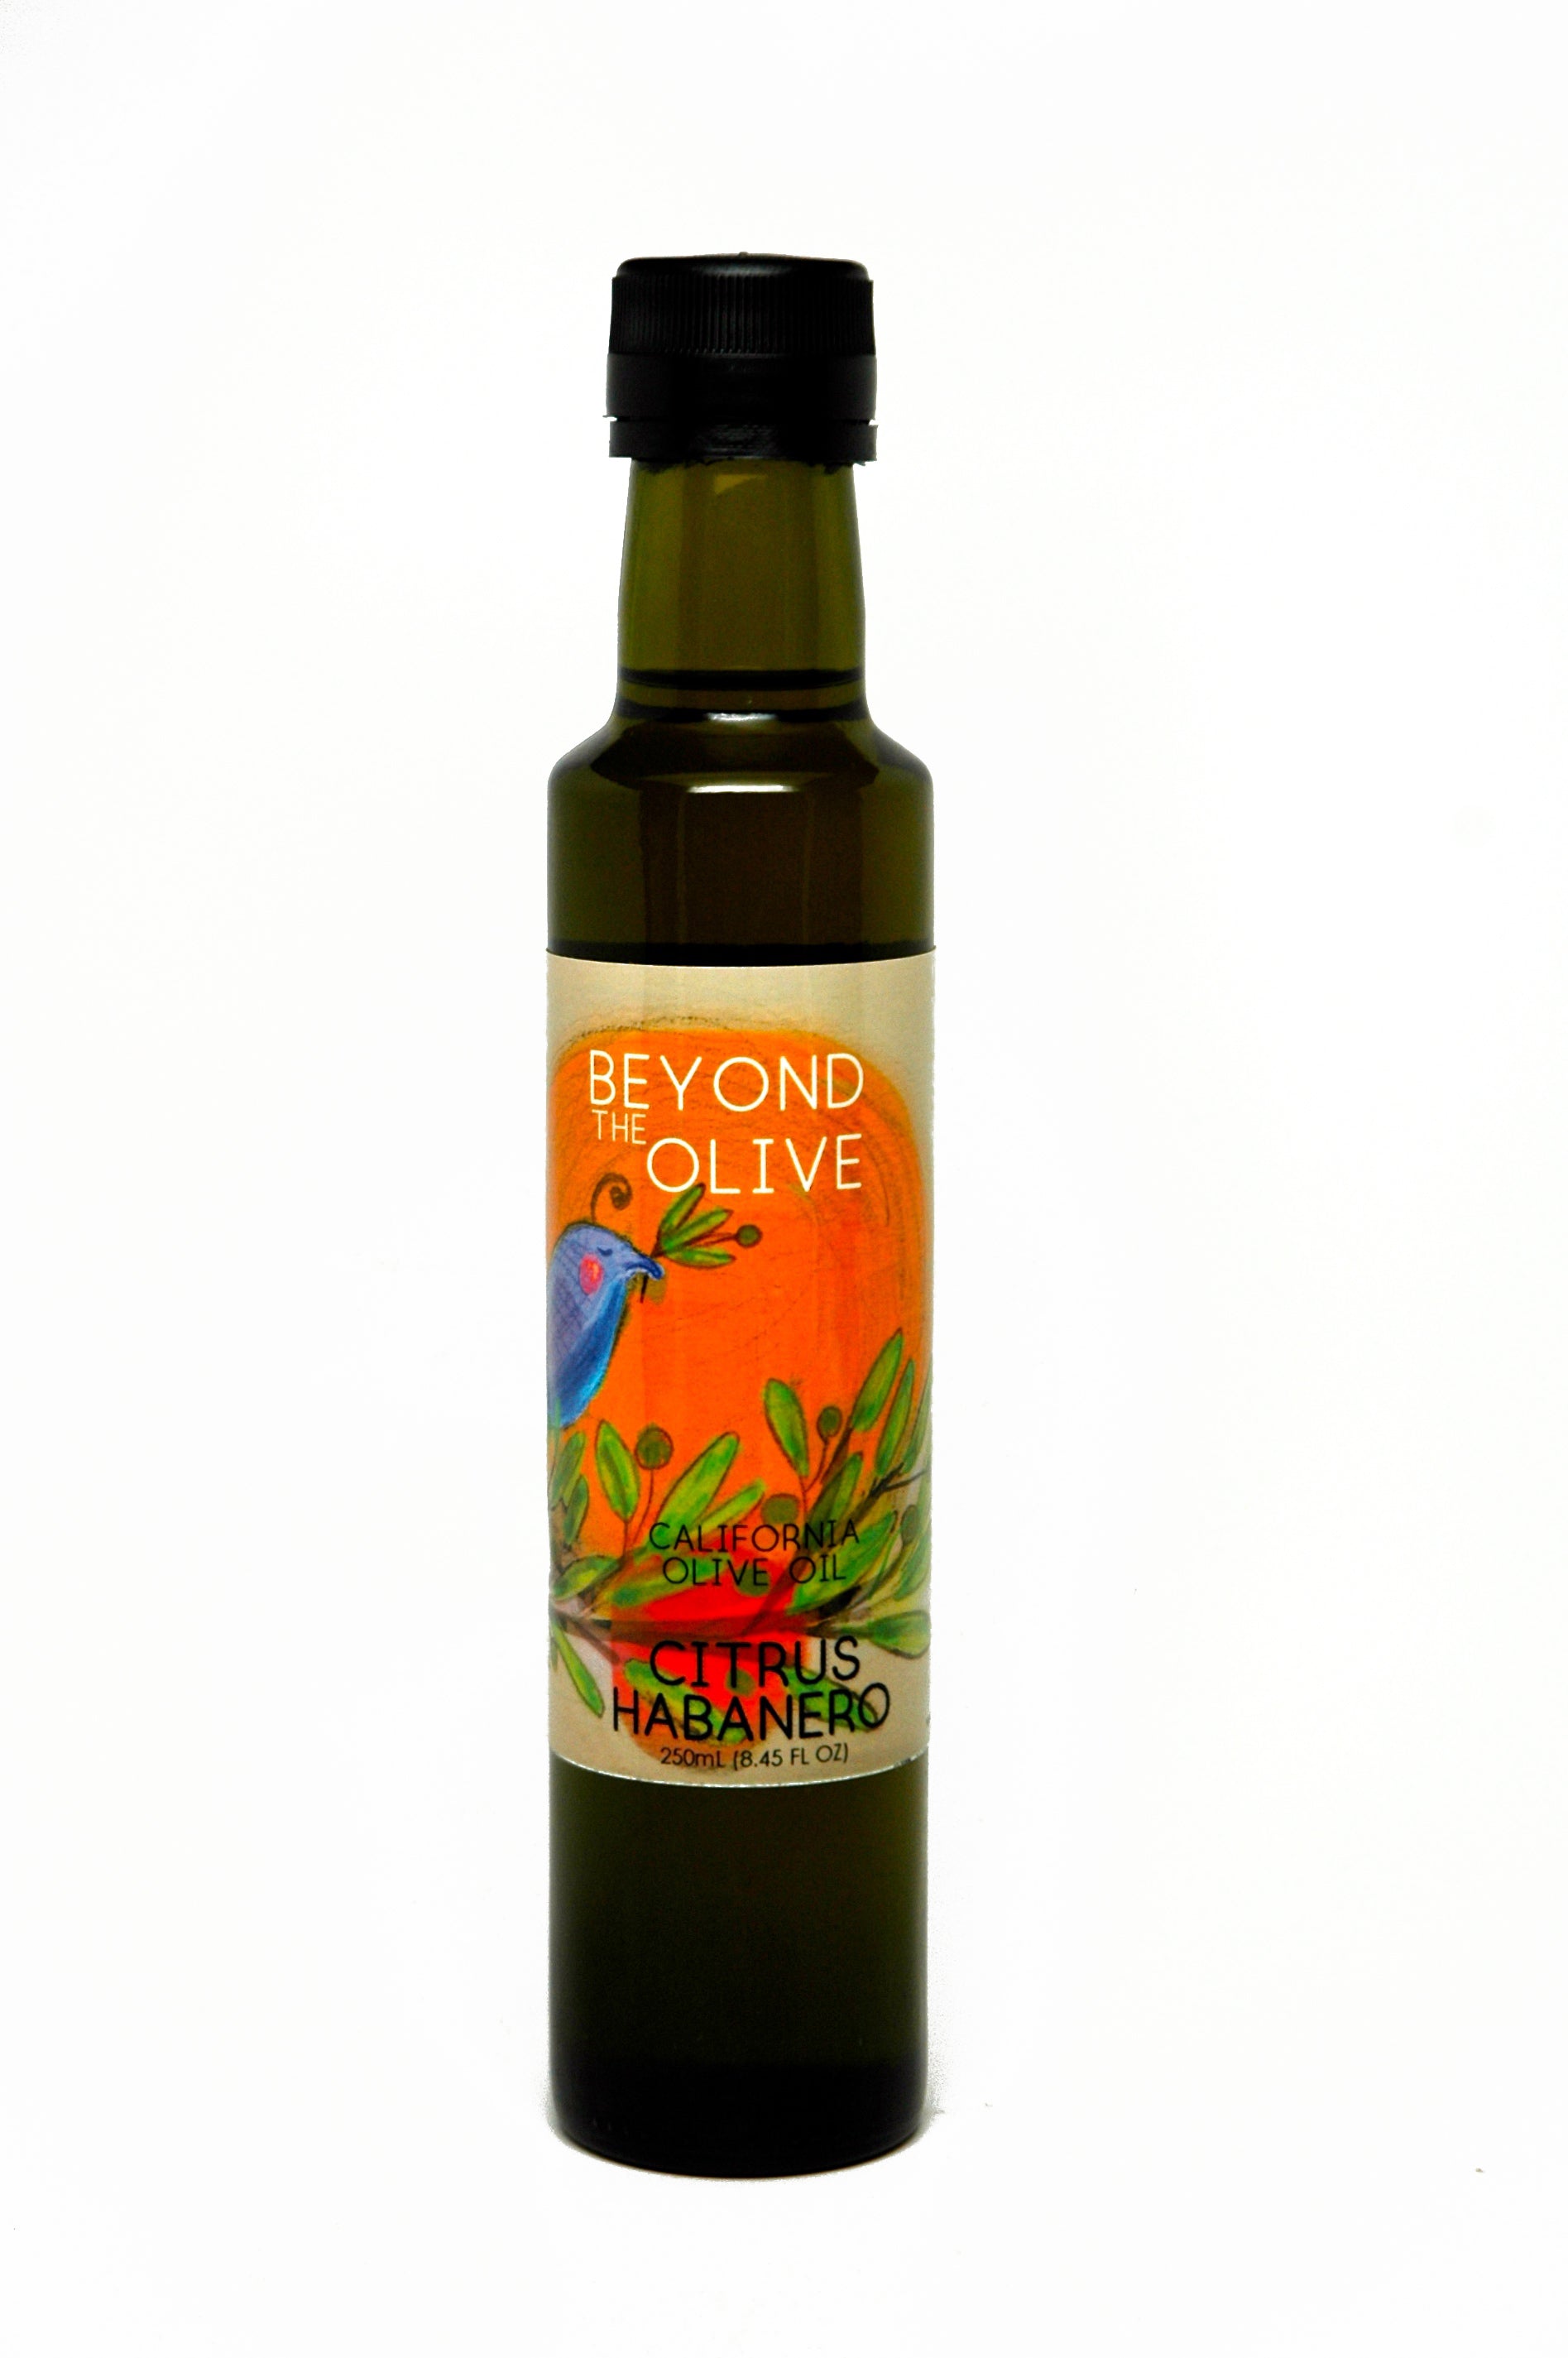 Citrus Habanero Olive Oil